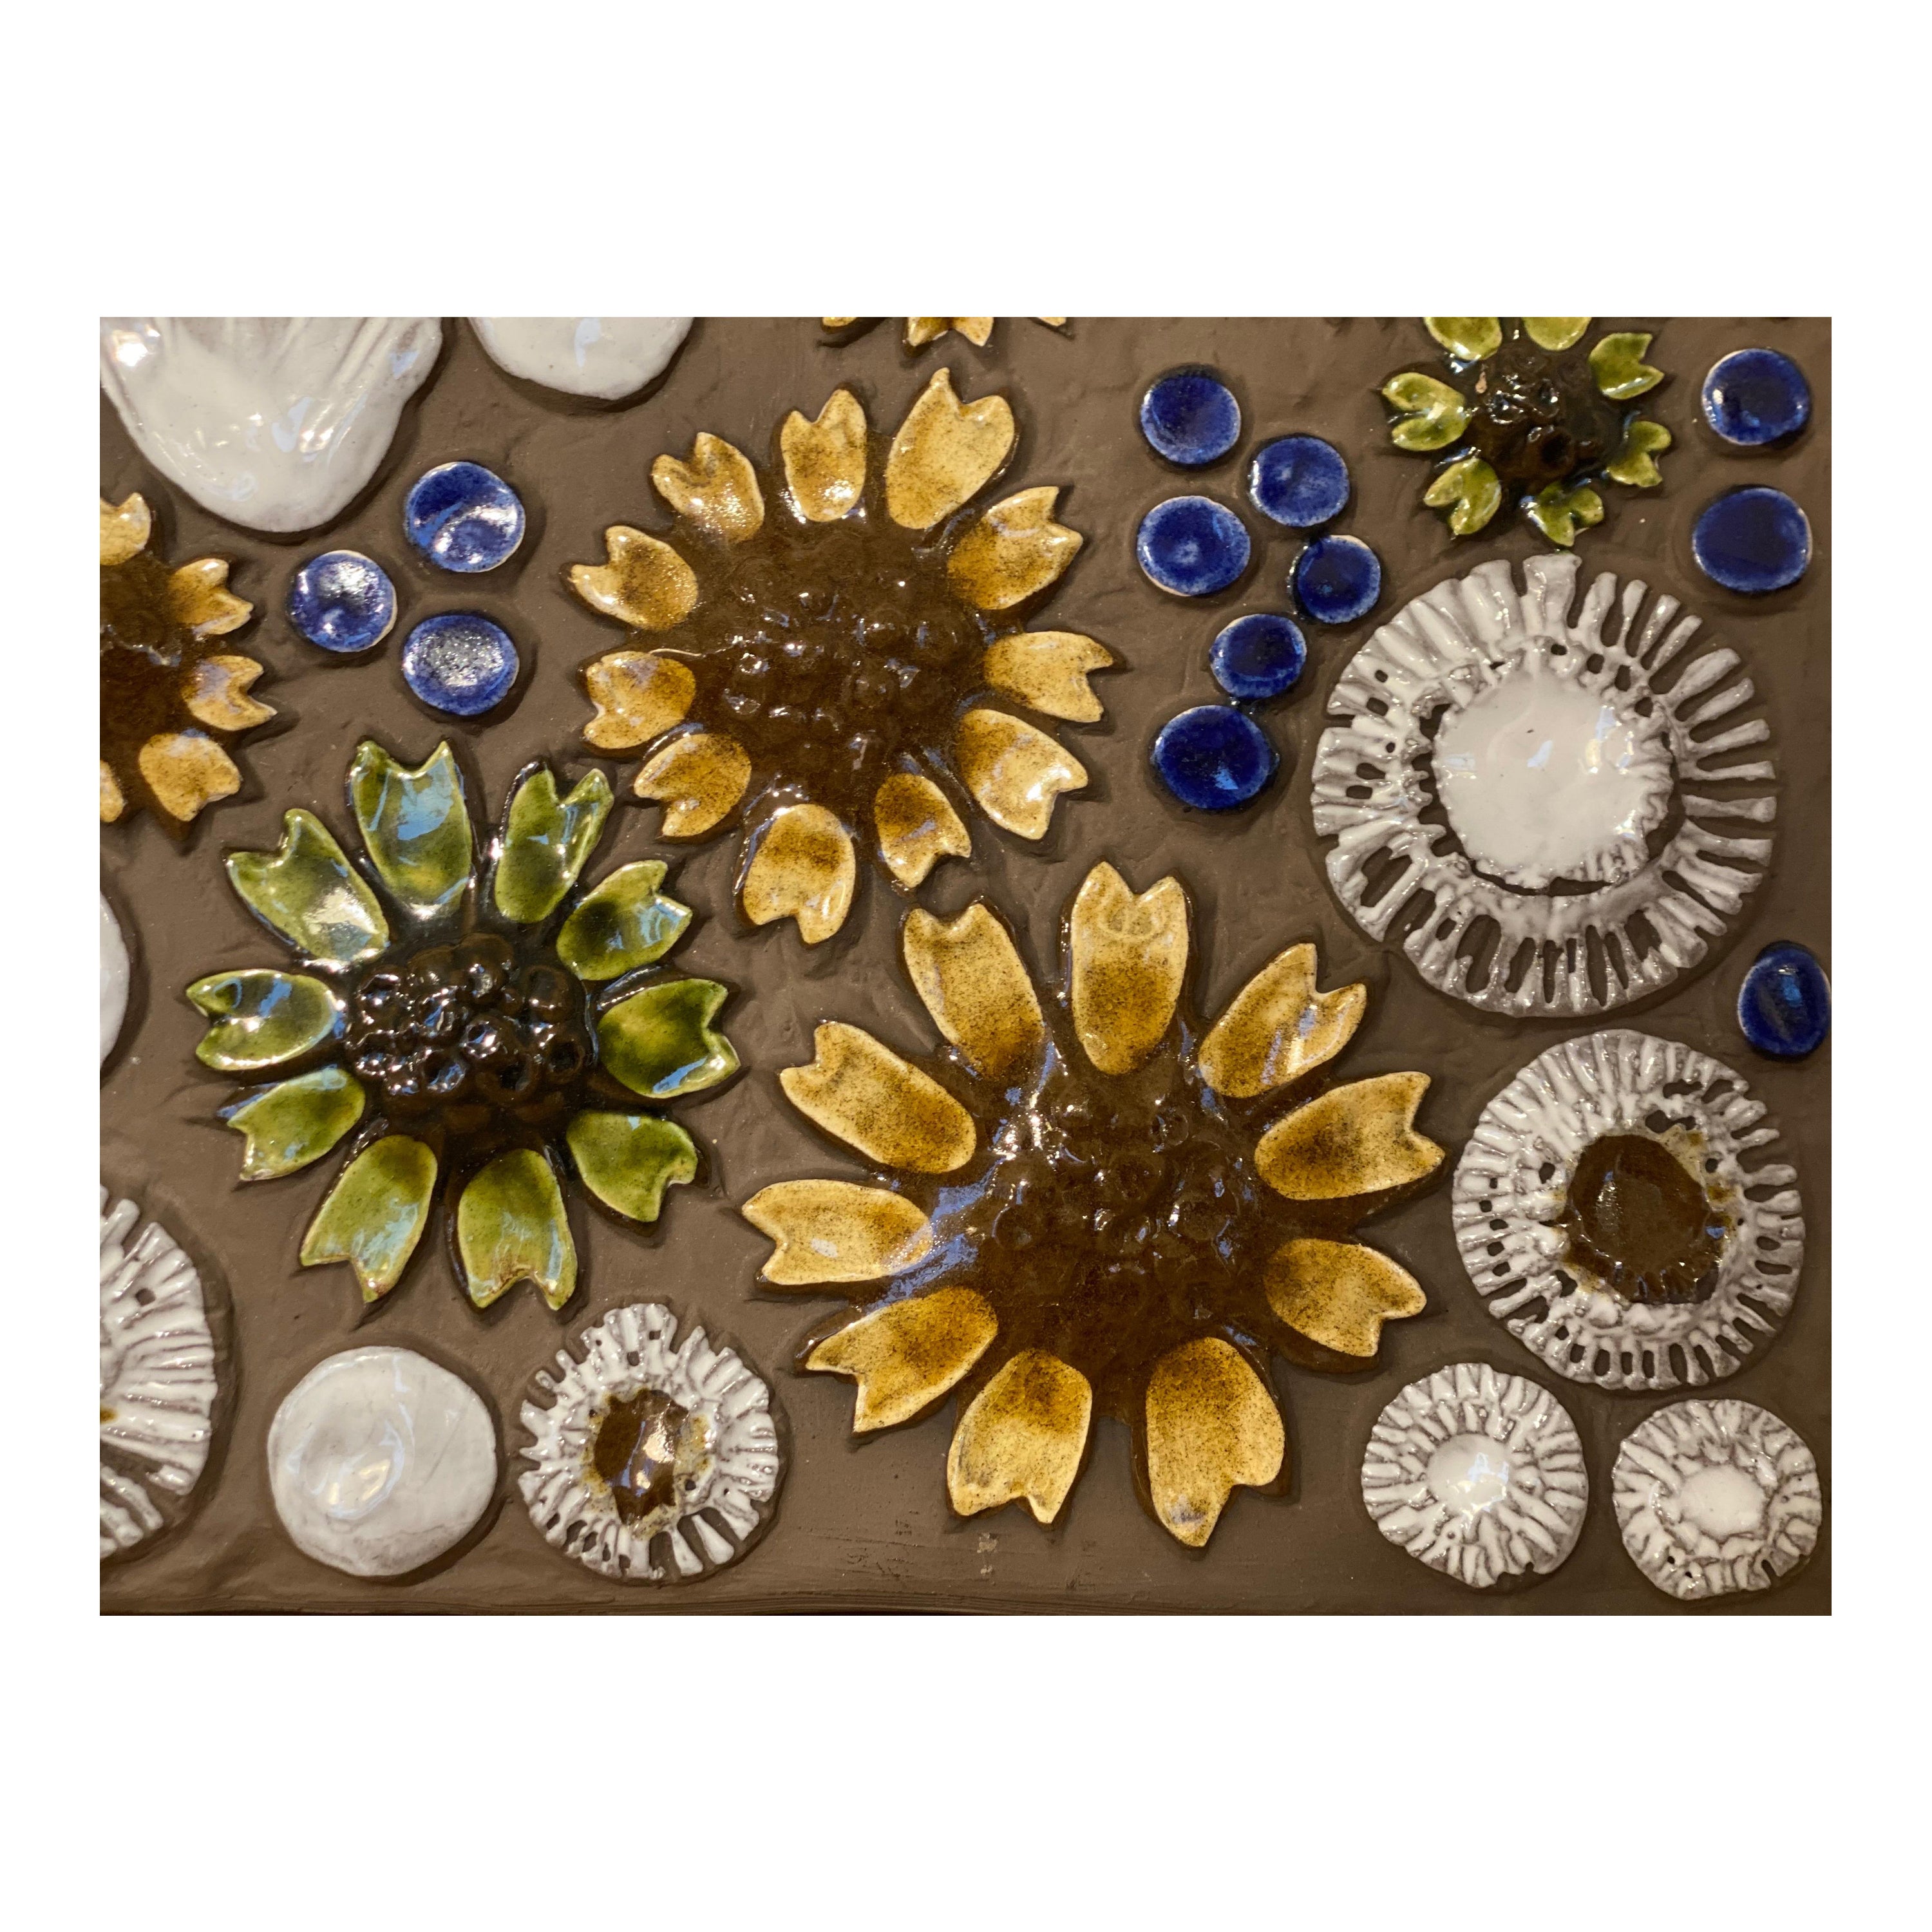 Ceramic Flower Tile Designed by Aimo Nietosvuori for Jie Gantofta, Sweden